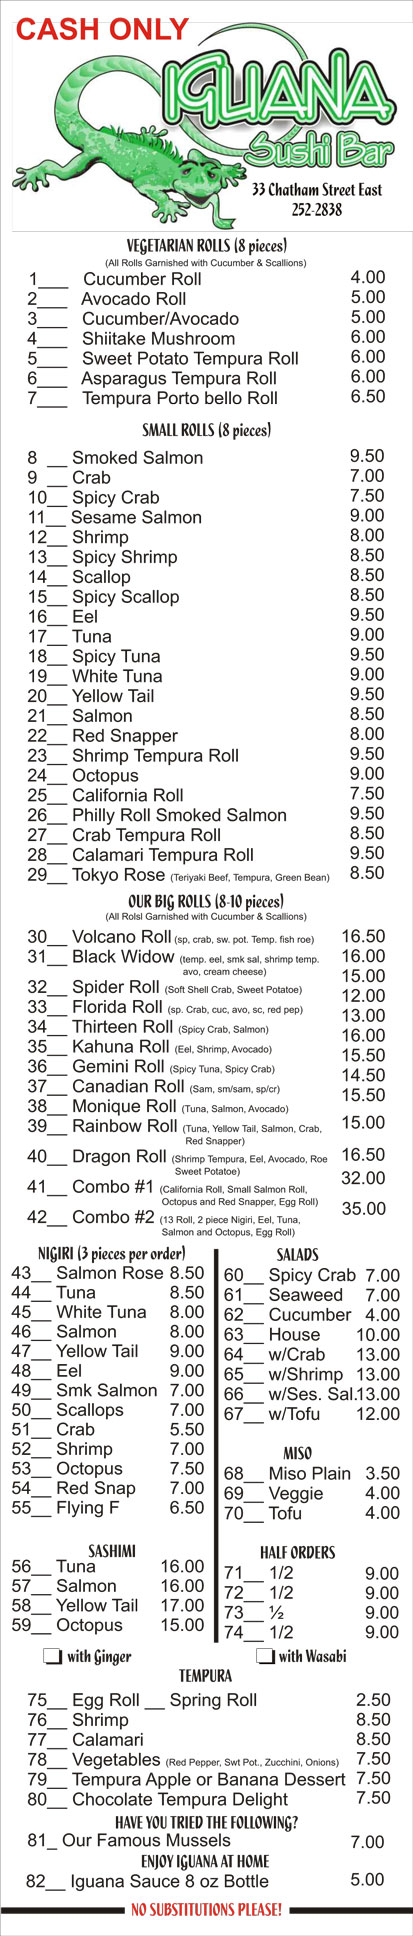 Iguana Sushi Bar Menu - Page 1!